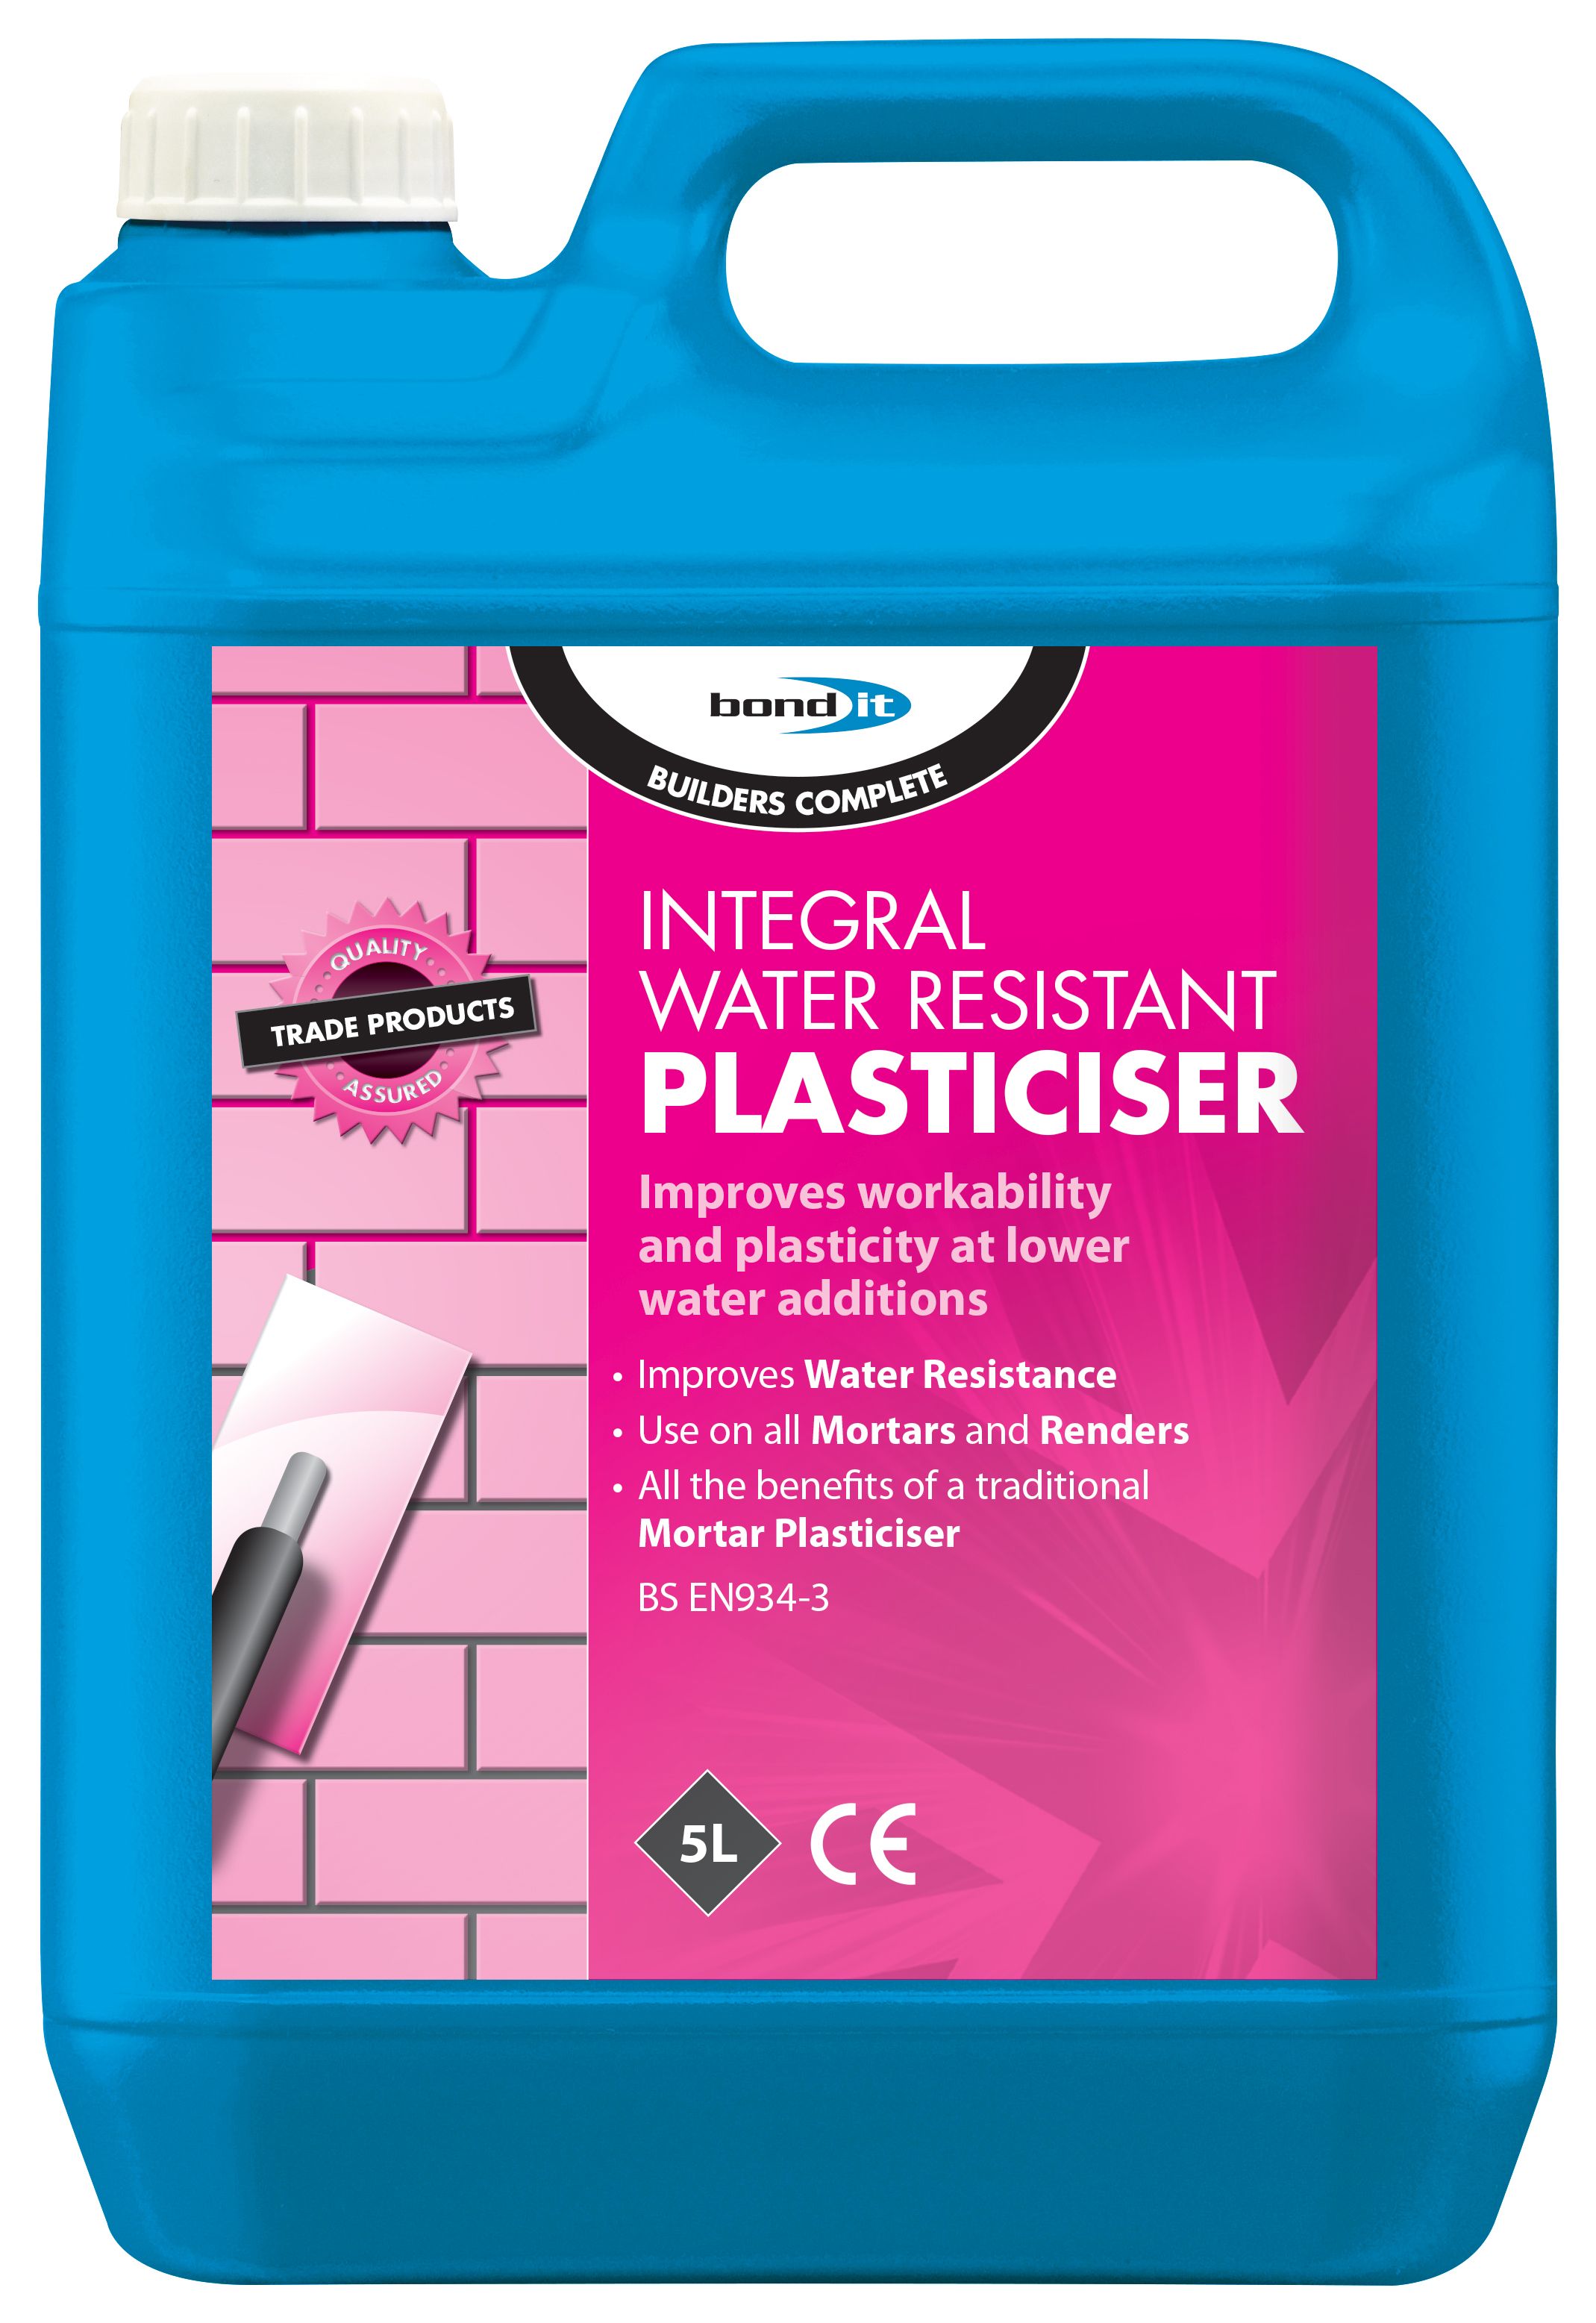 Bond It Integral Water Resistant Plasticiser - 5L